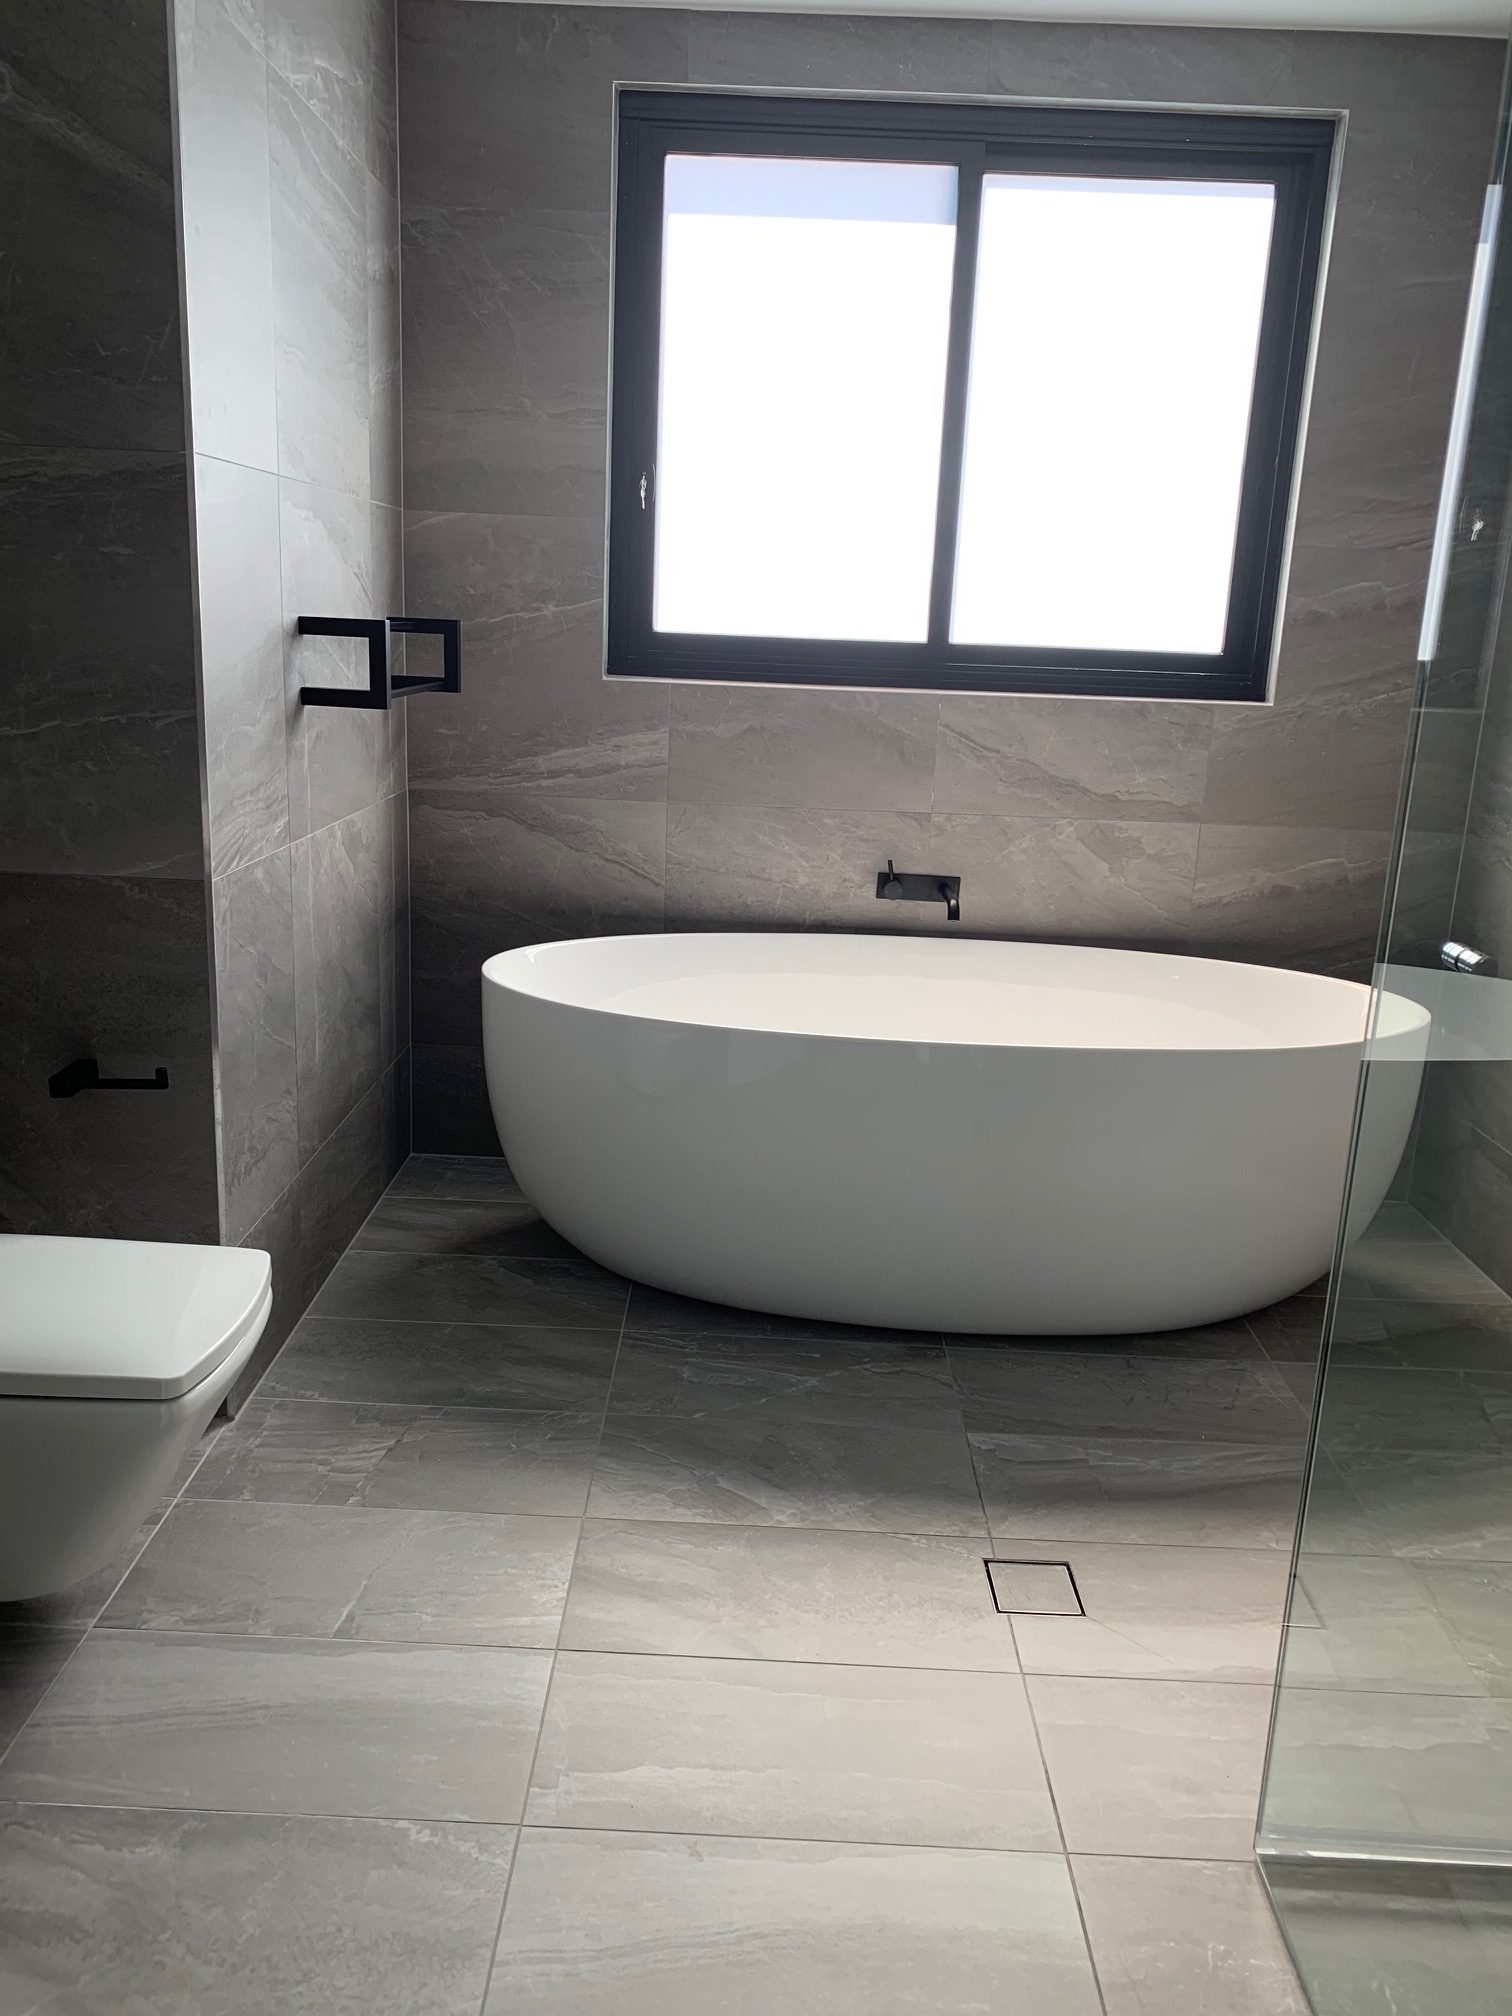 Bathtub showcase with Warmtech Inscreed heating system